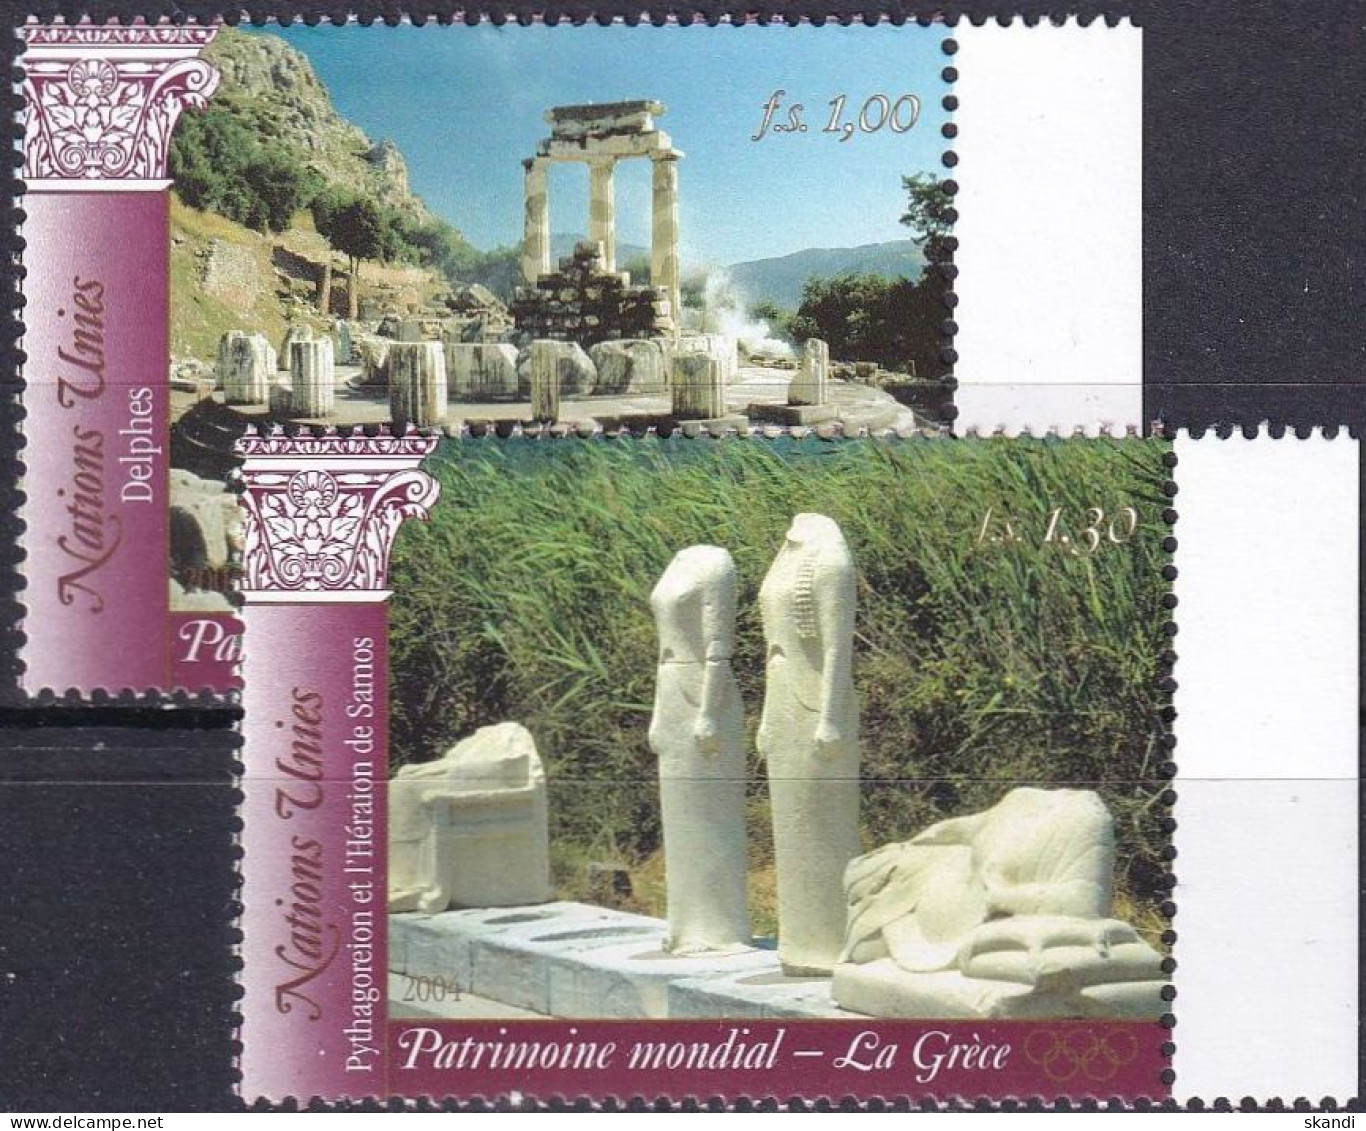 UNO GENF 2004 Mi-Nr. 495/96 ** MNH - Unused Stamps